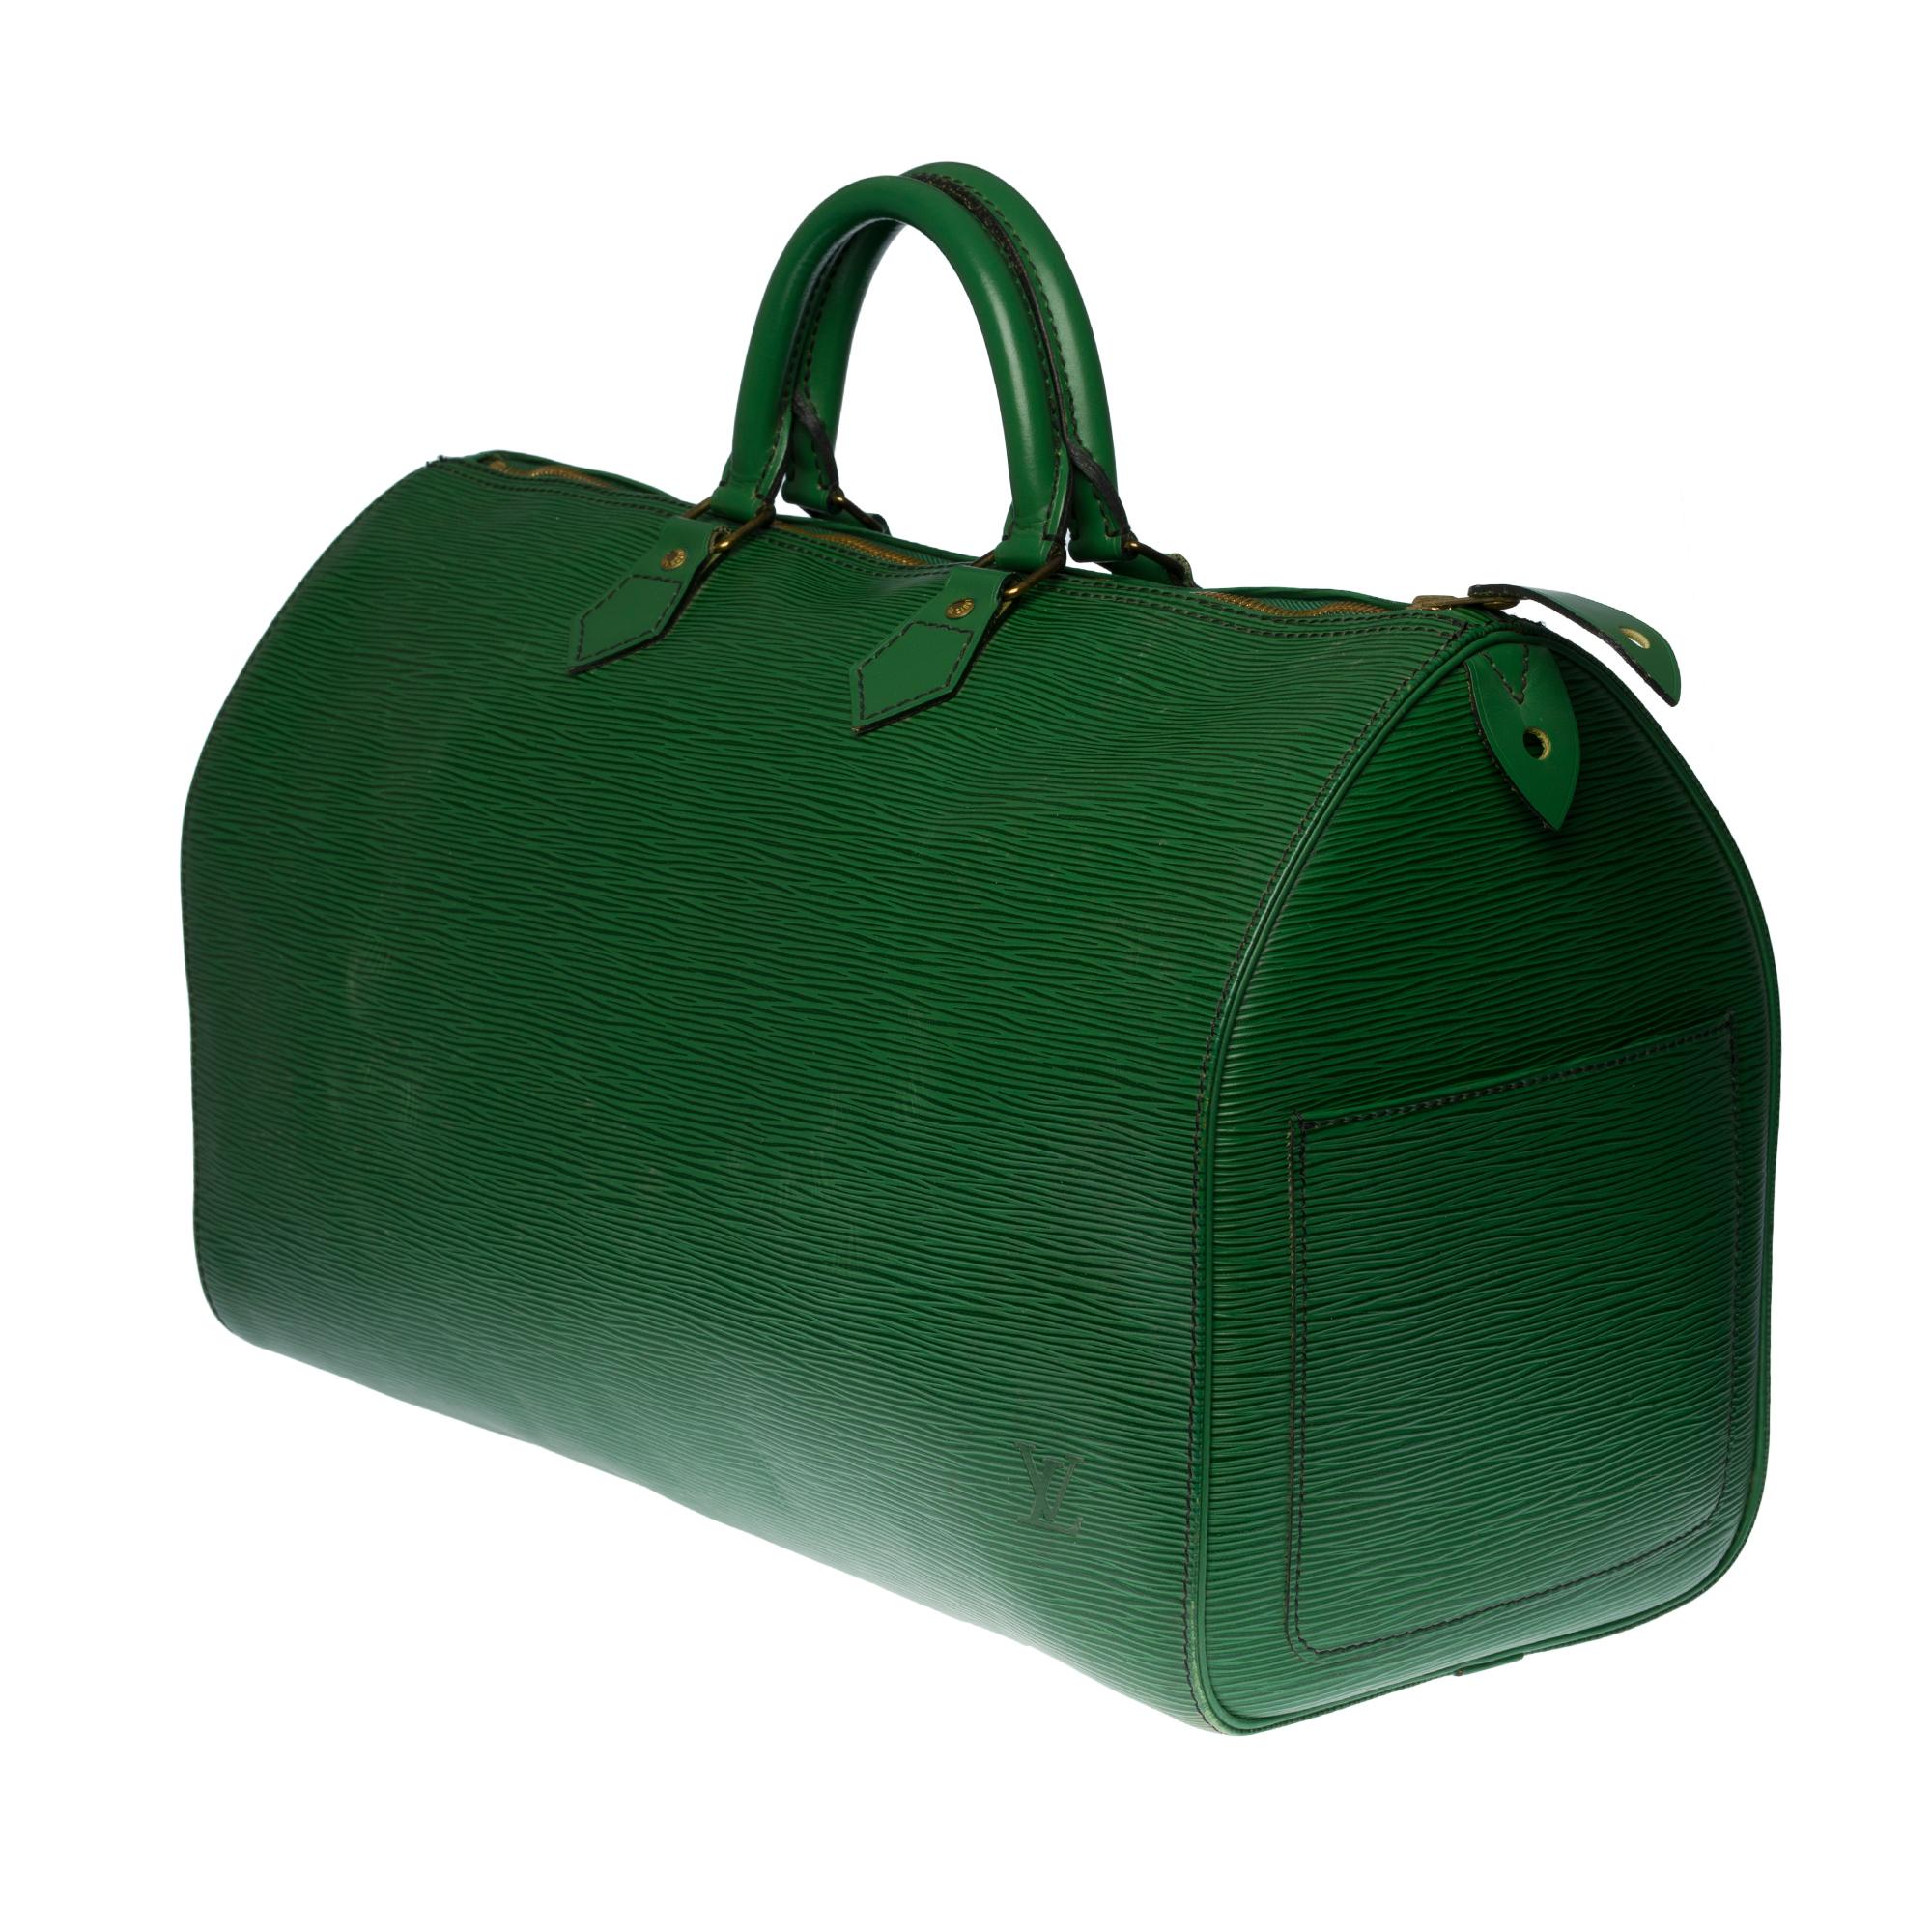 Black Stunning Louis Vuitton Speedy 40 handbag in green épi leather